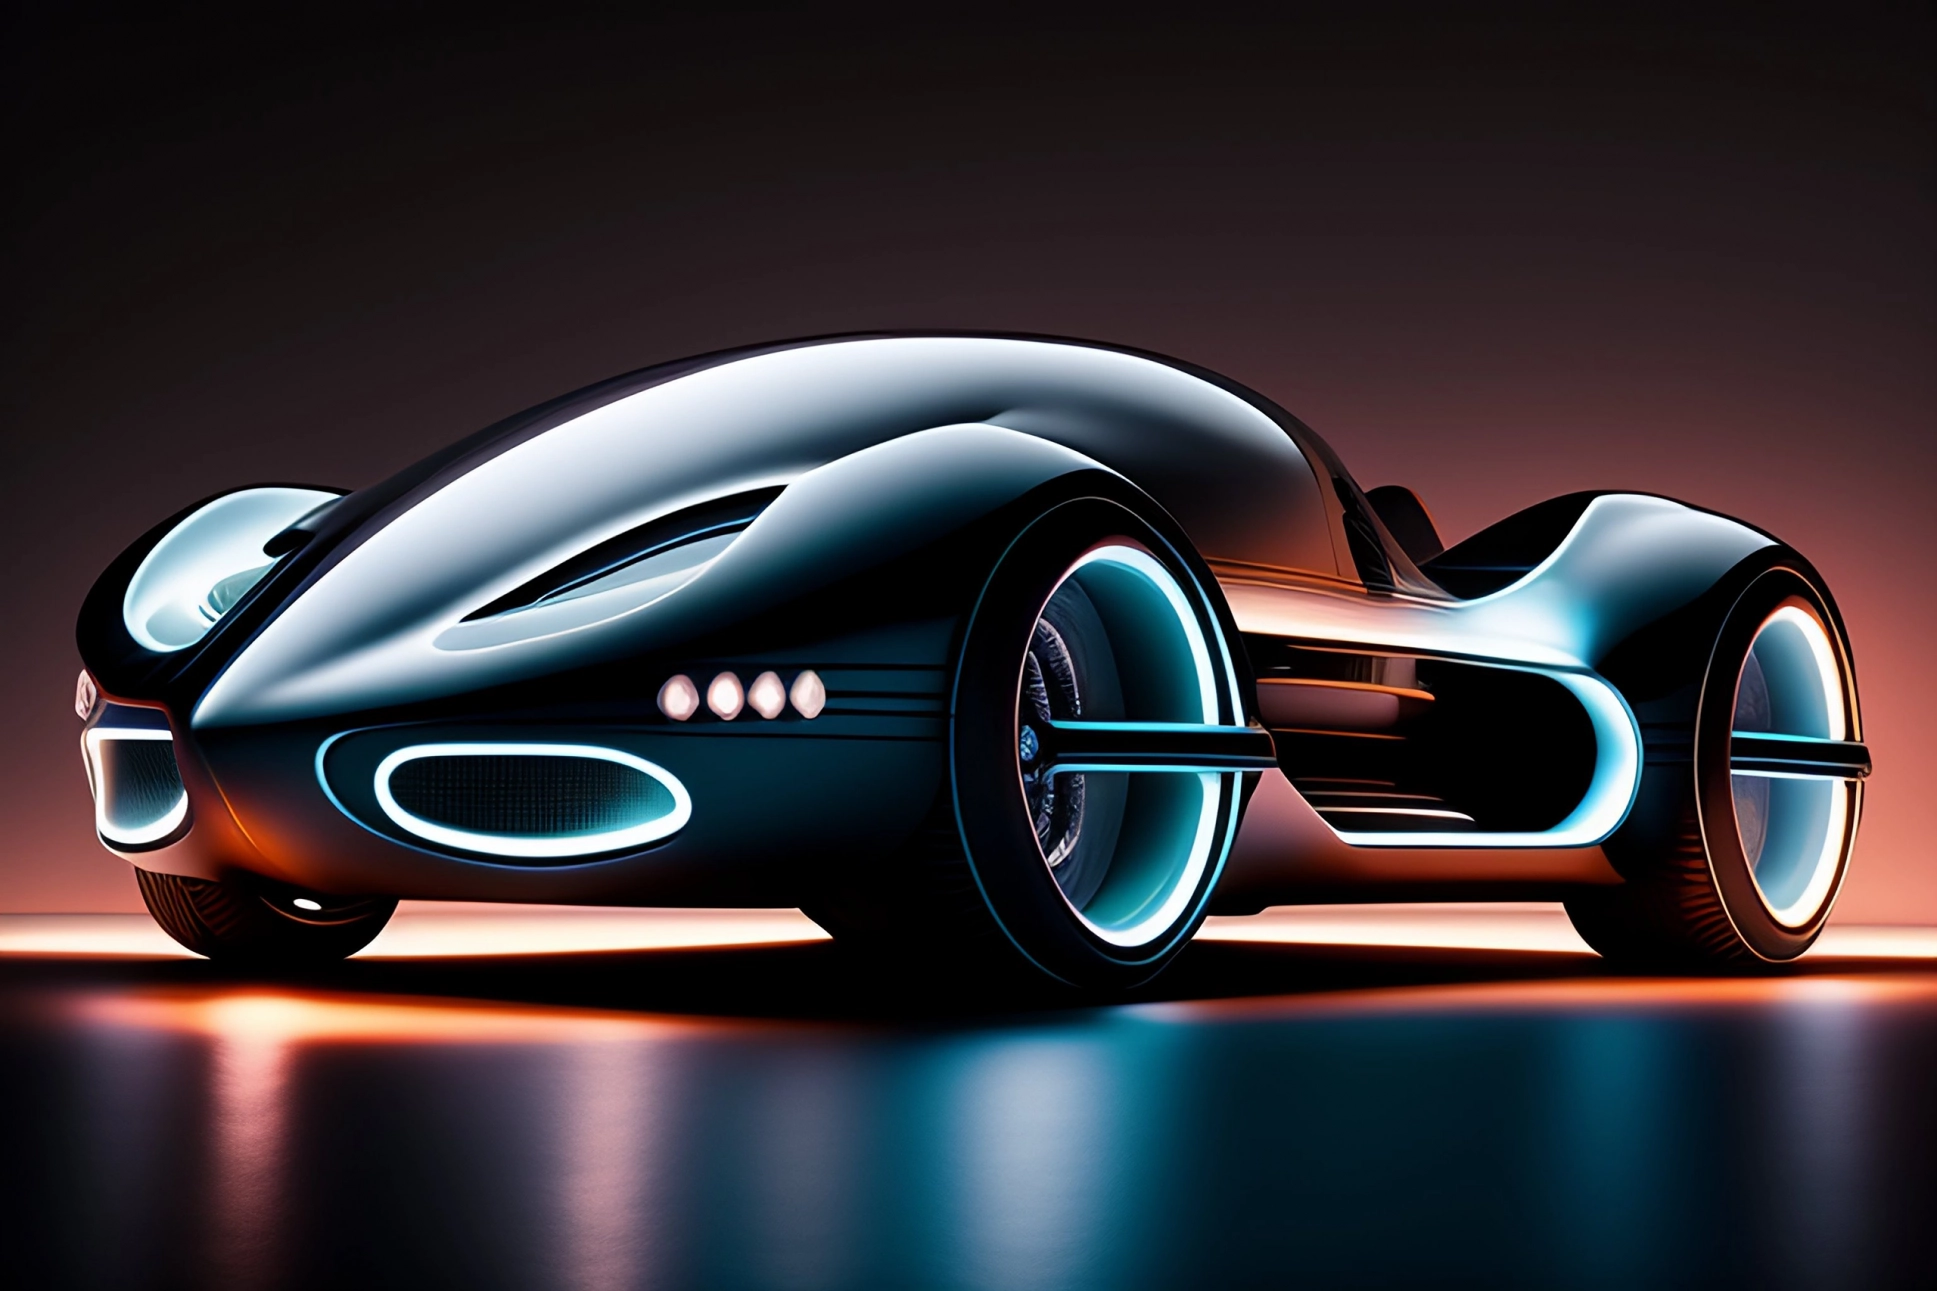 Concept-Car Entwurf in Cyberpunk-Ästhetik